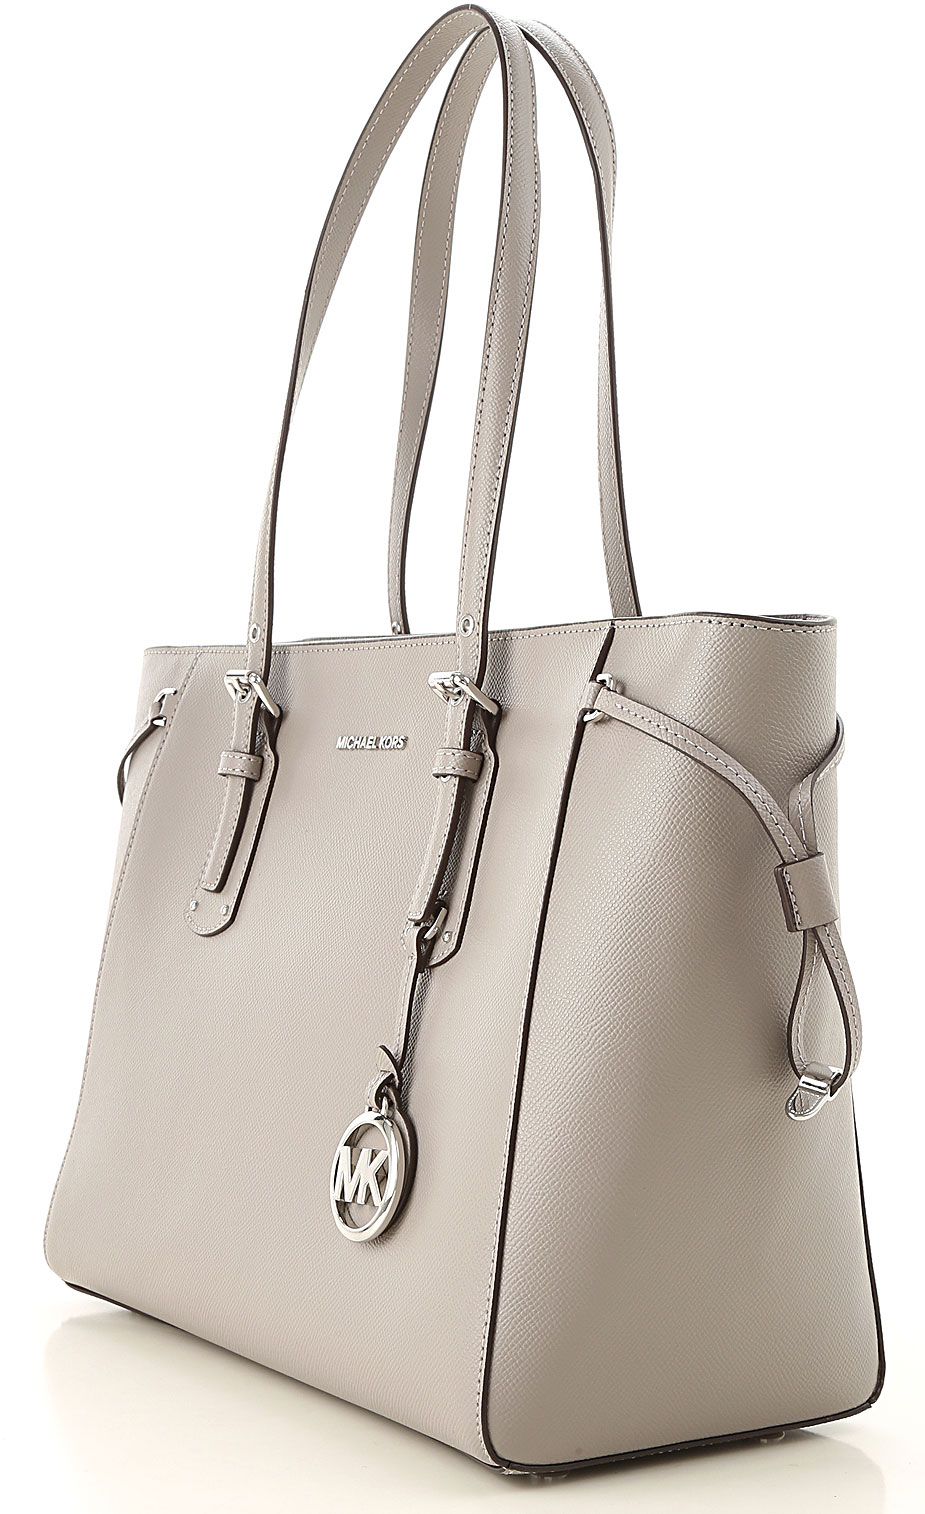 Handbags Michael Kors, Style code: 30h7sv6t8l-081-A997